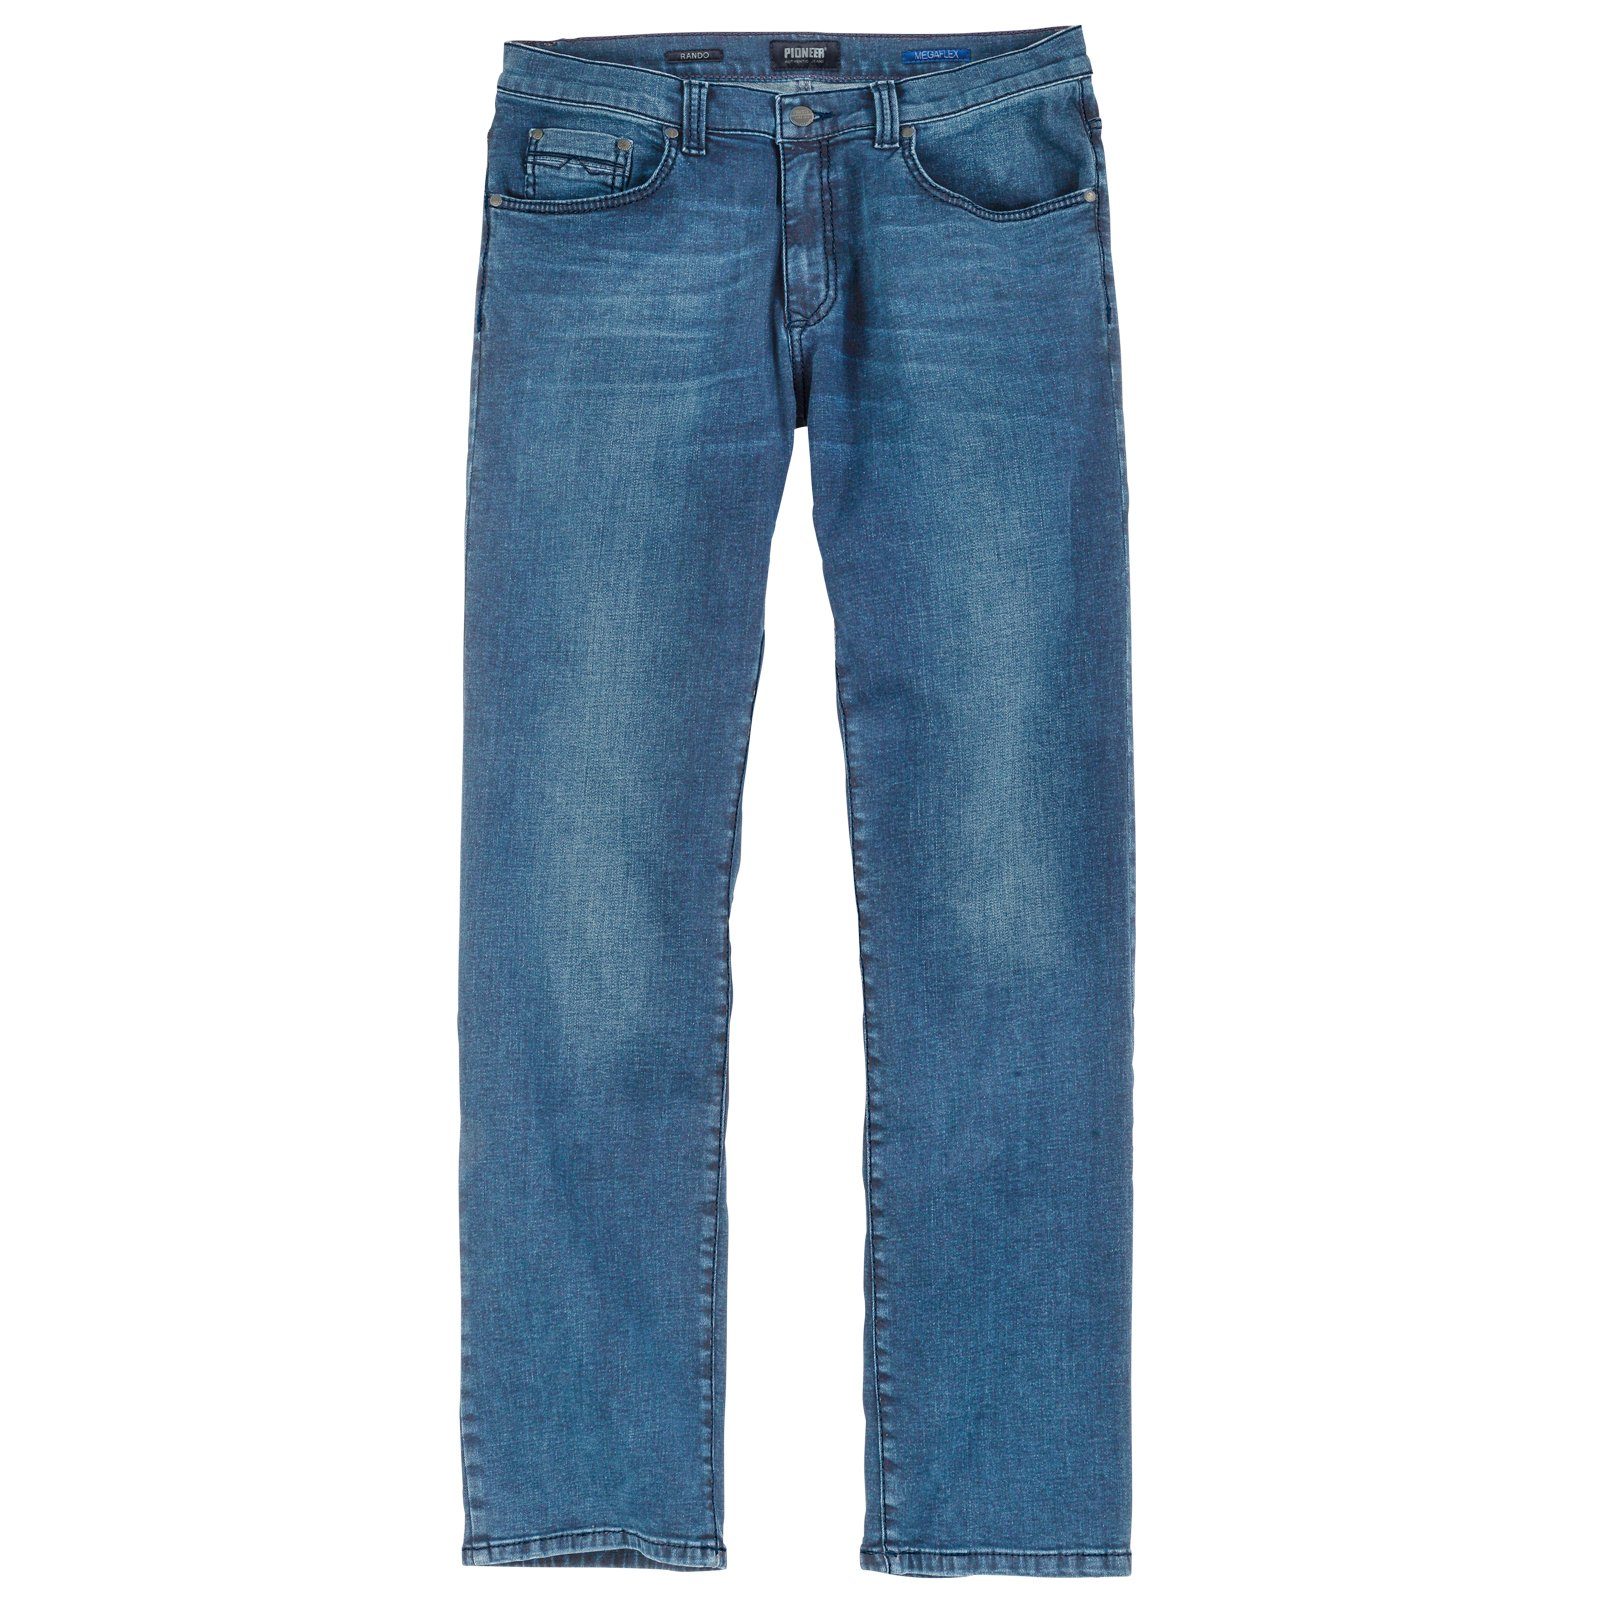 Pionier Stretch-Jeans Große Größen Herren Stretch-Jeans blau used Pioneer Rando